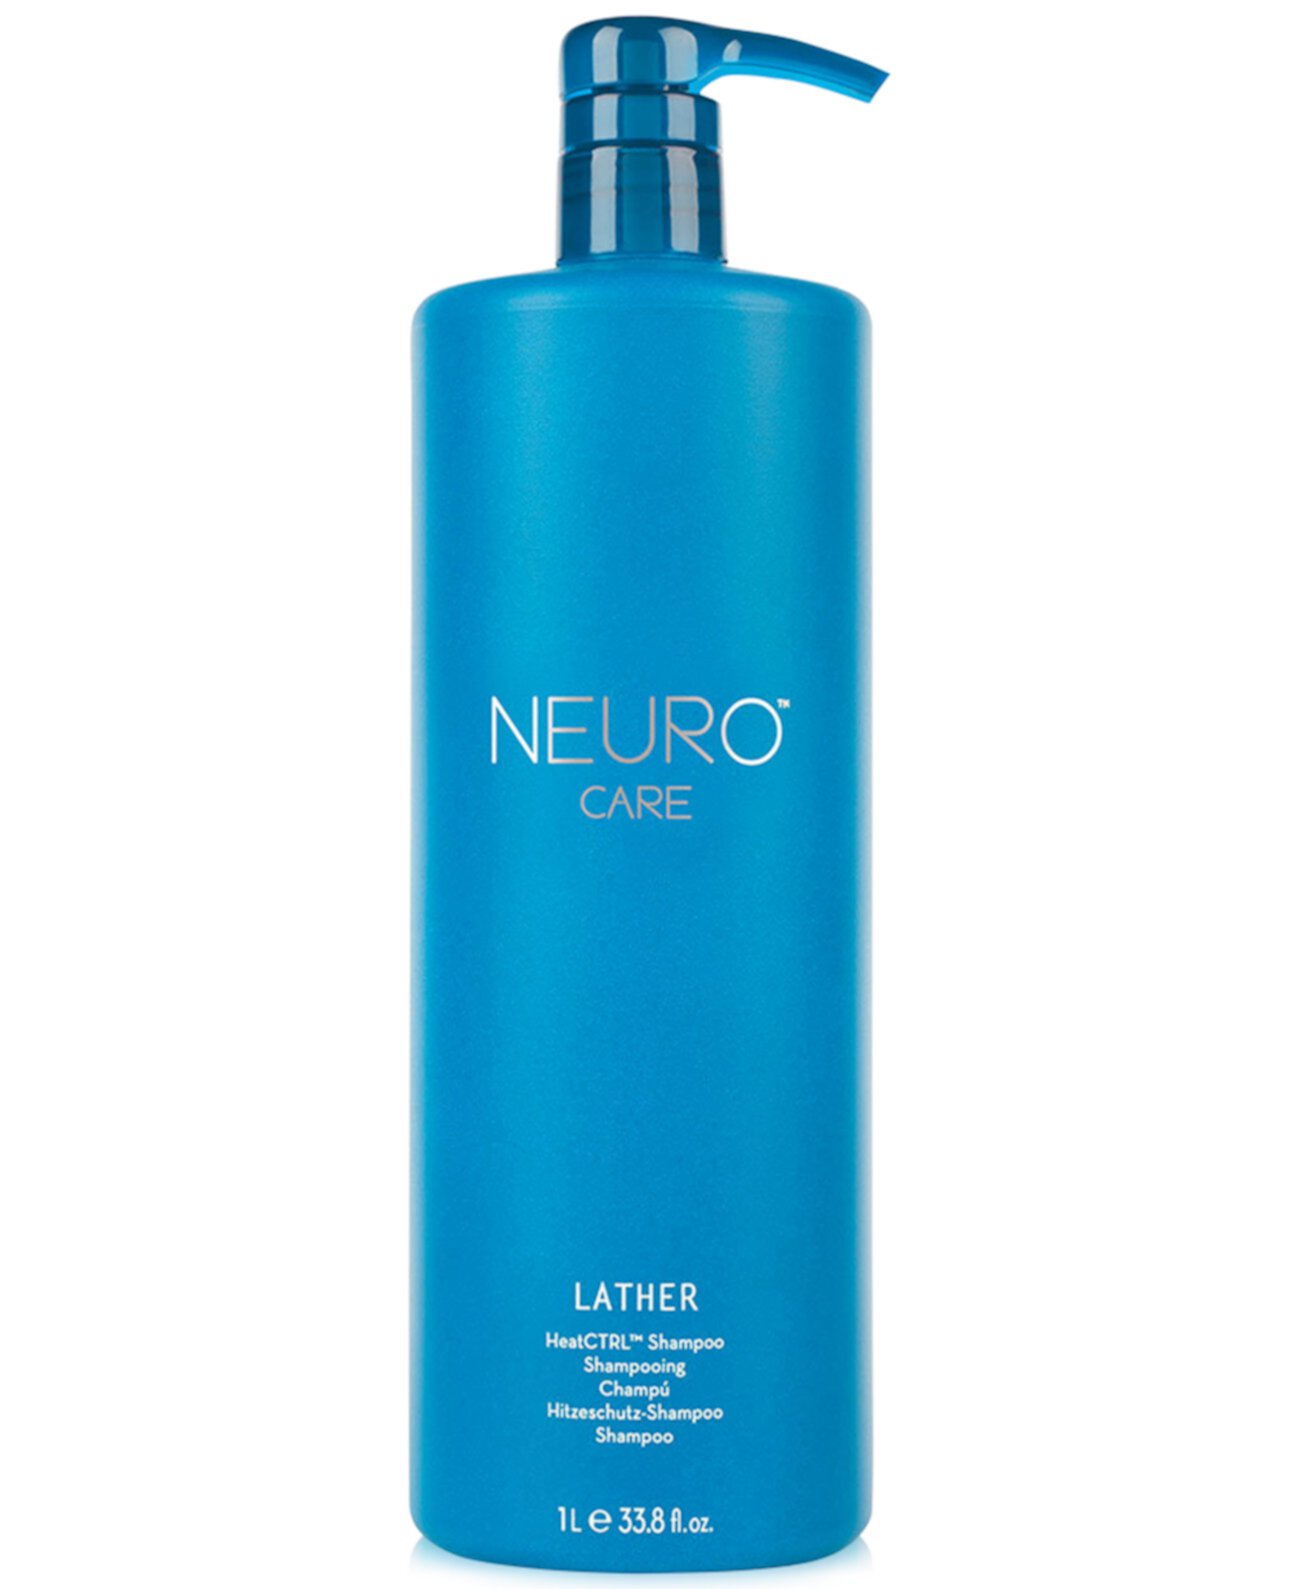 Шампунь Neuro Care Lather HeatCTRL, 33,8 унции, от PUREBEAUTY Salon & Spa PAUL MITCHELL